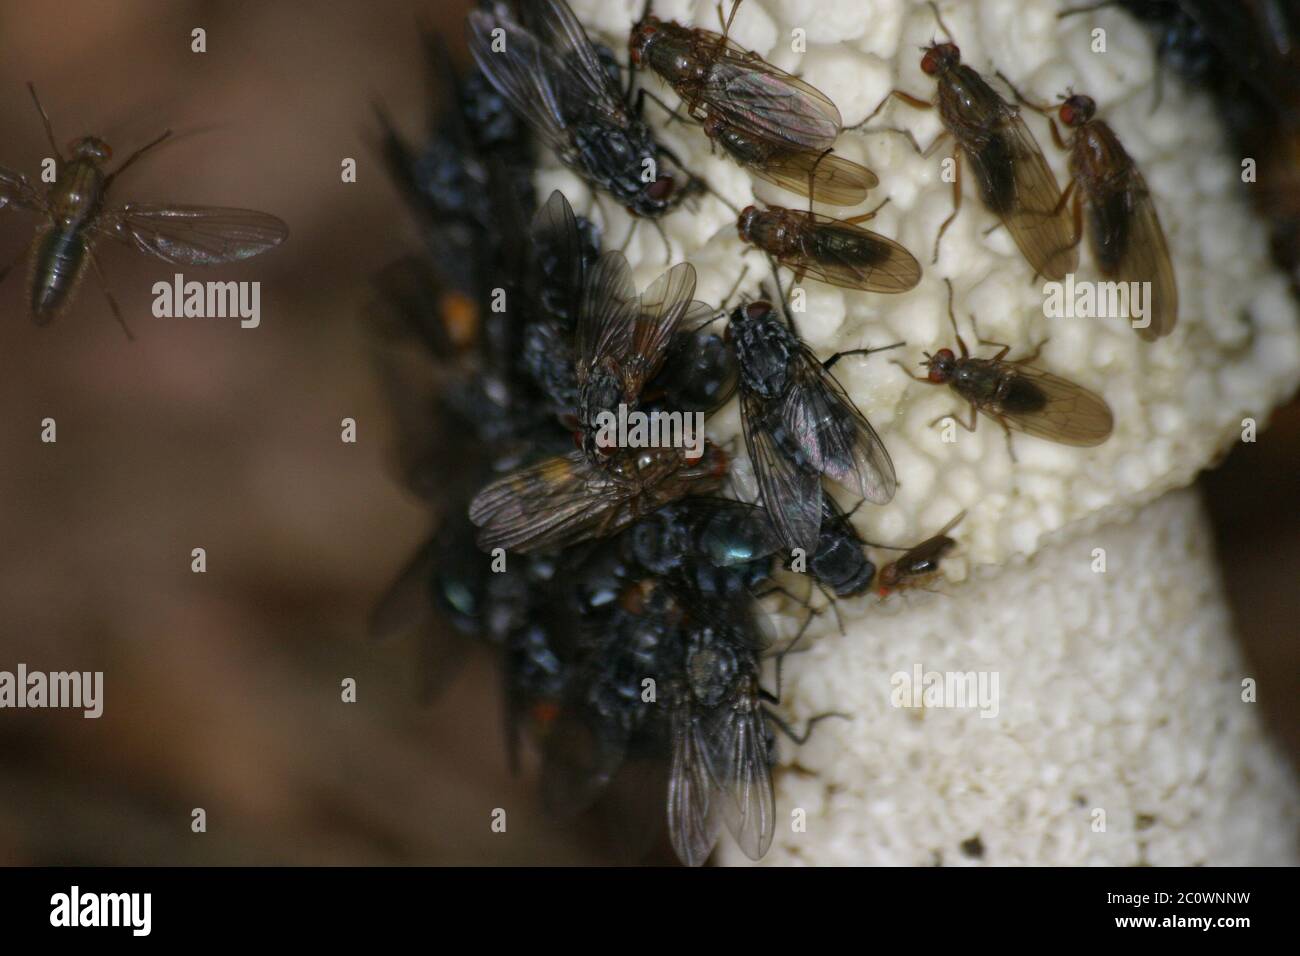 Stinkmorchel with flies Stock Photo